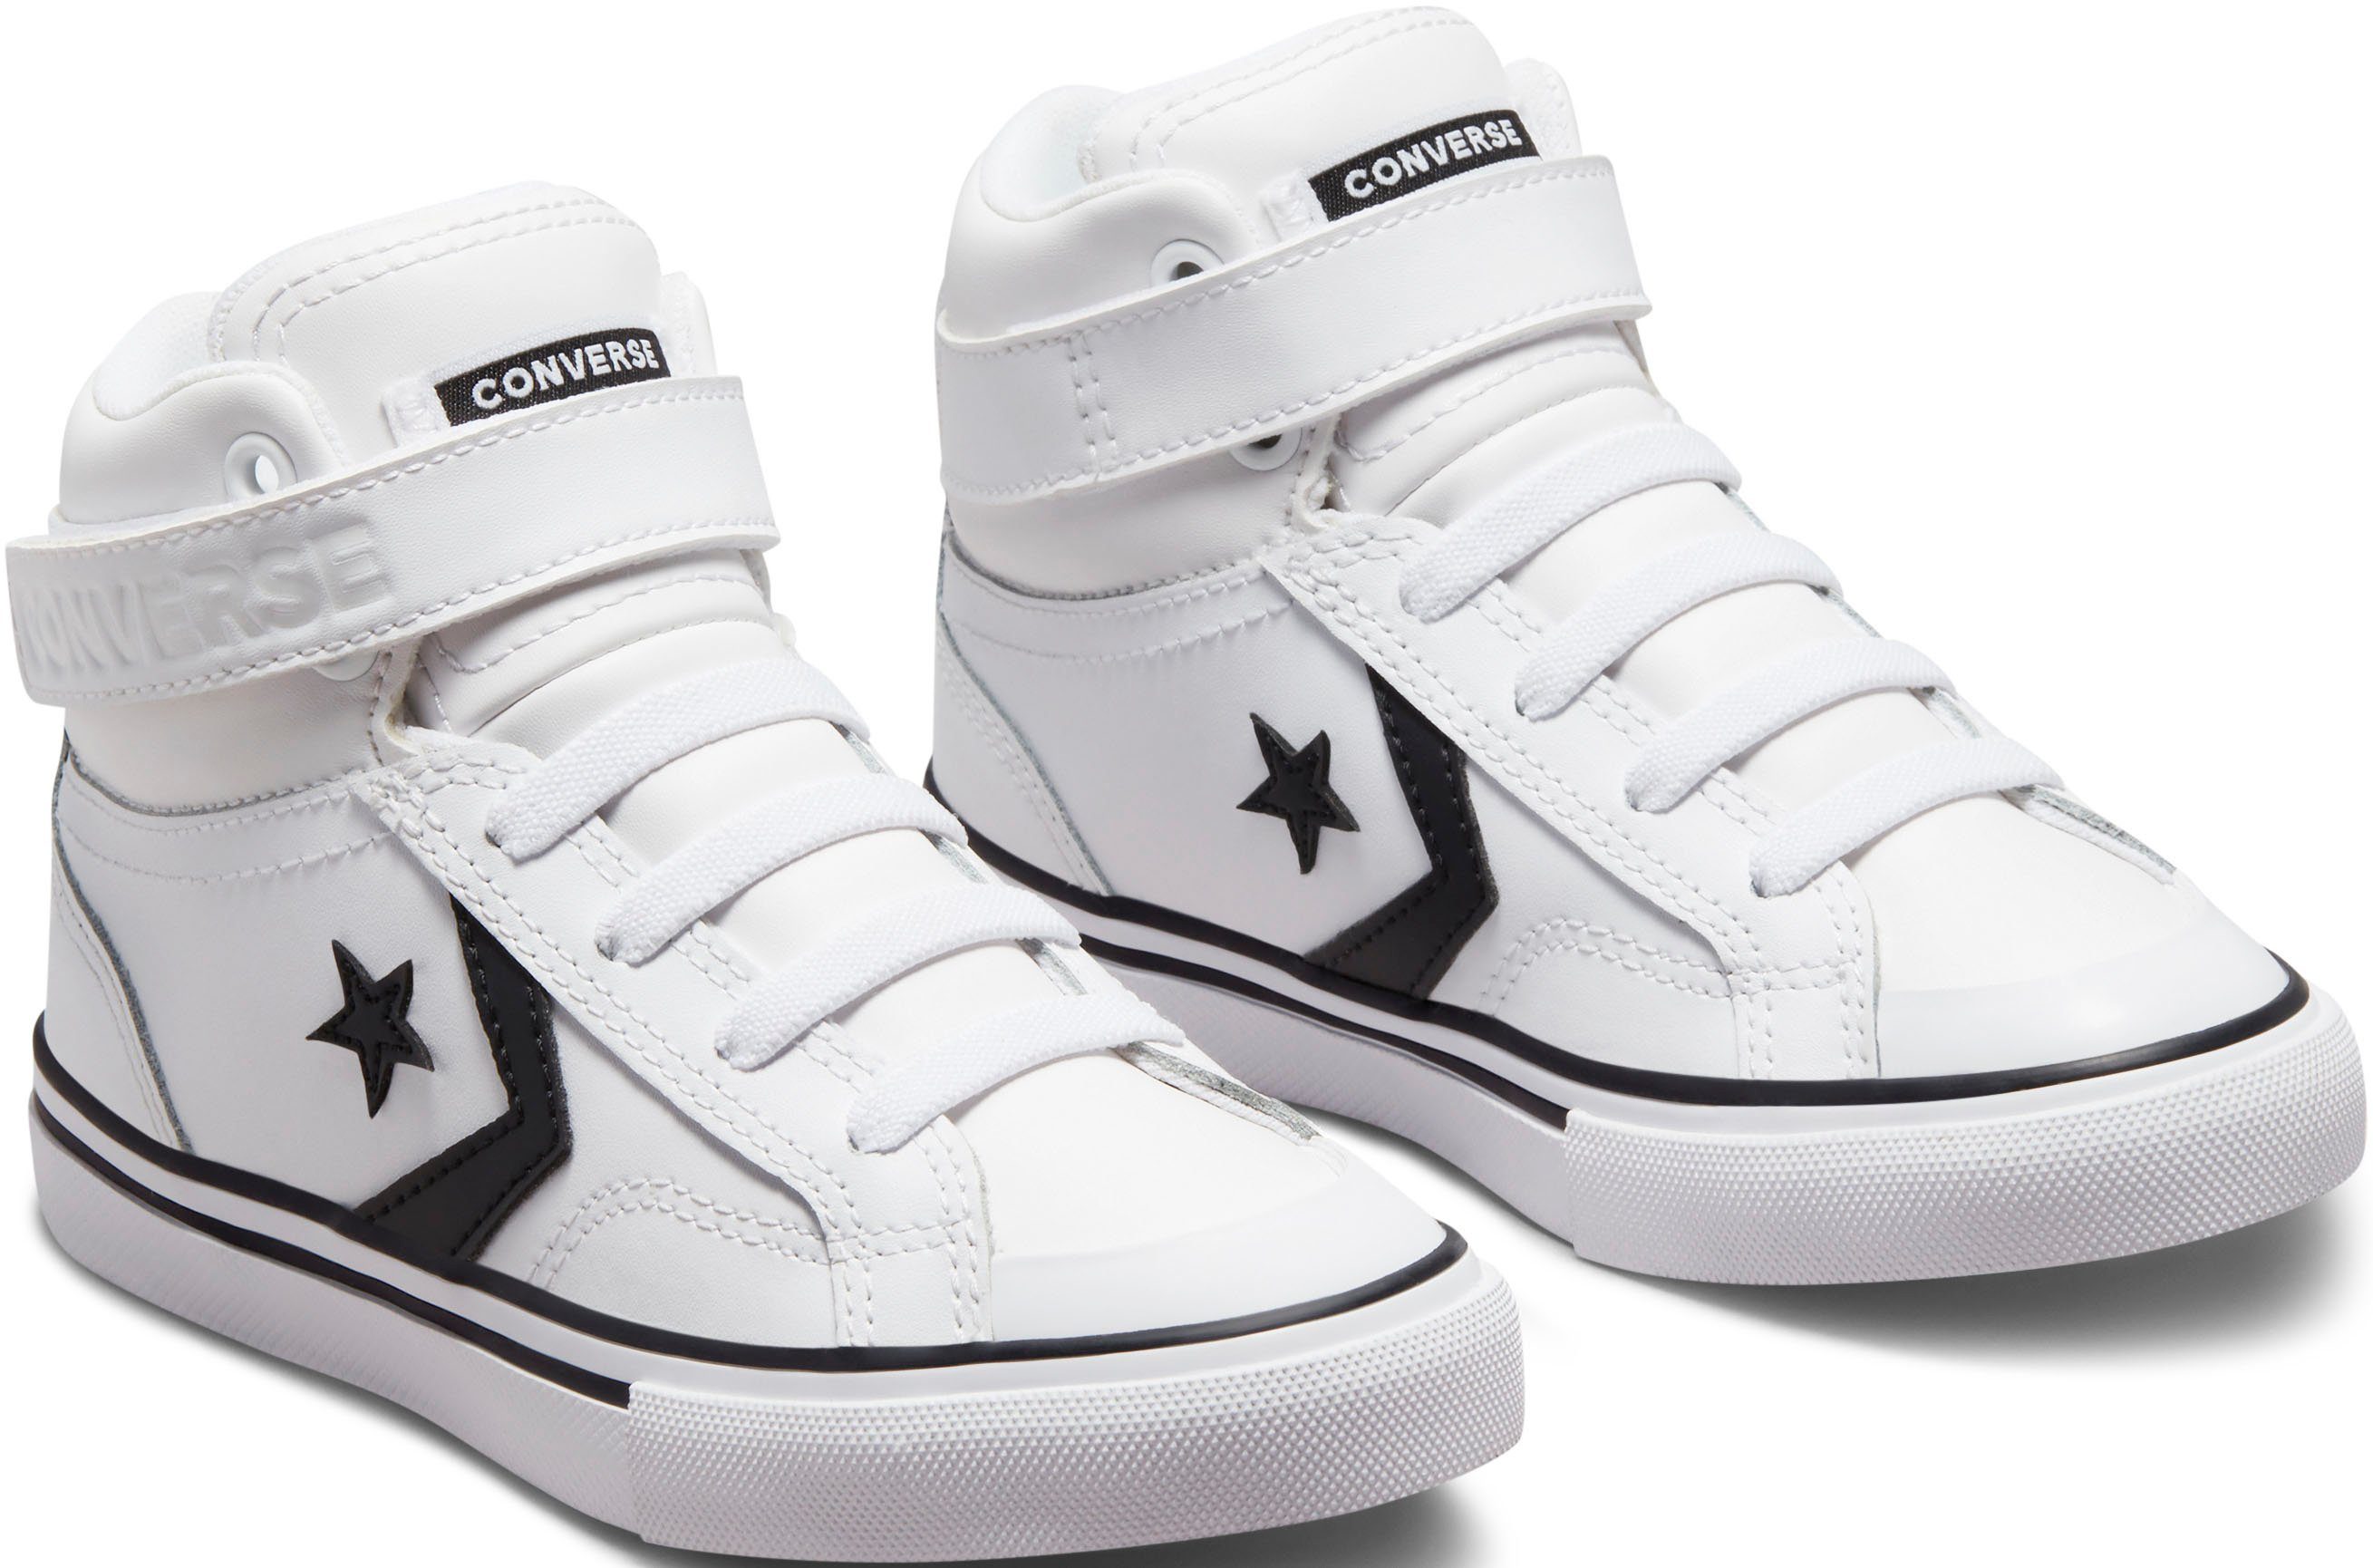 STRAP Sneaker Converse PRO weiß-schwarz BLAZE LEATHER